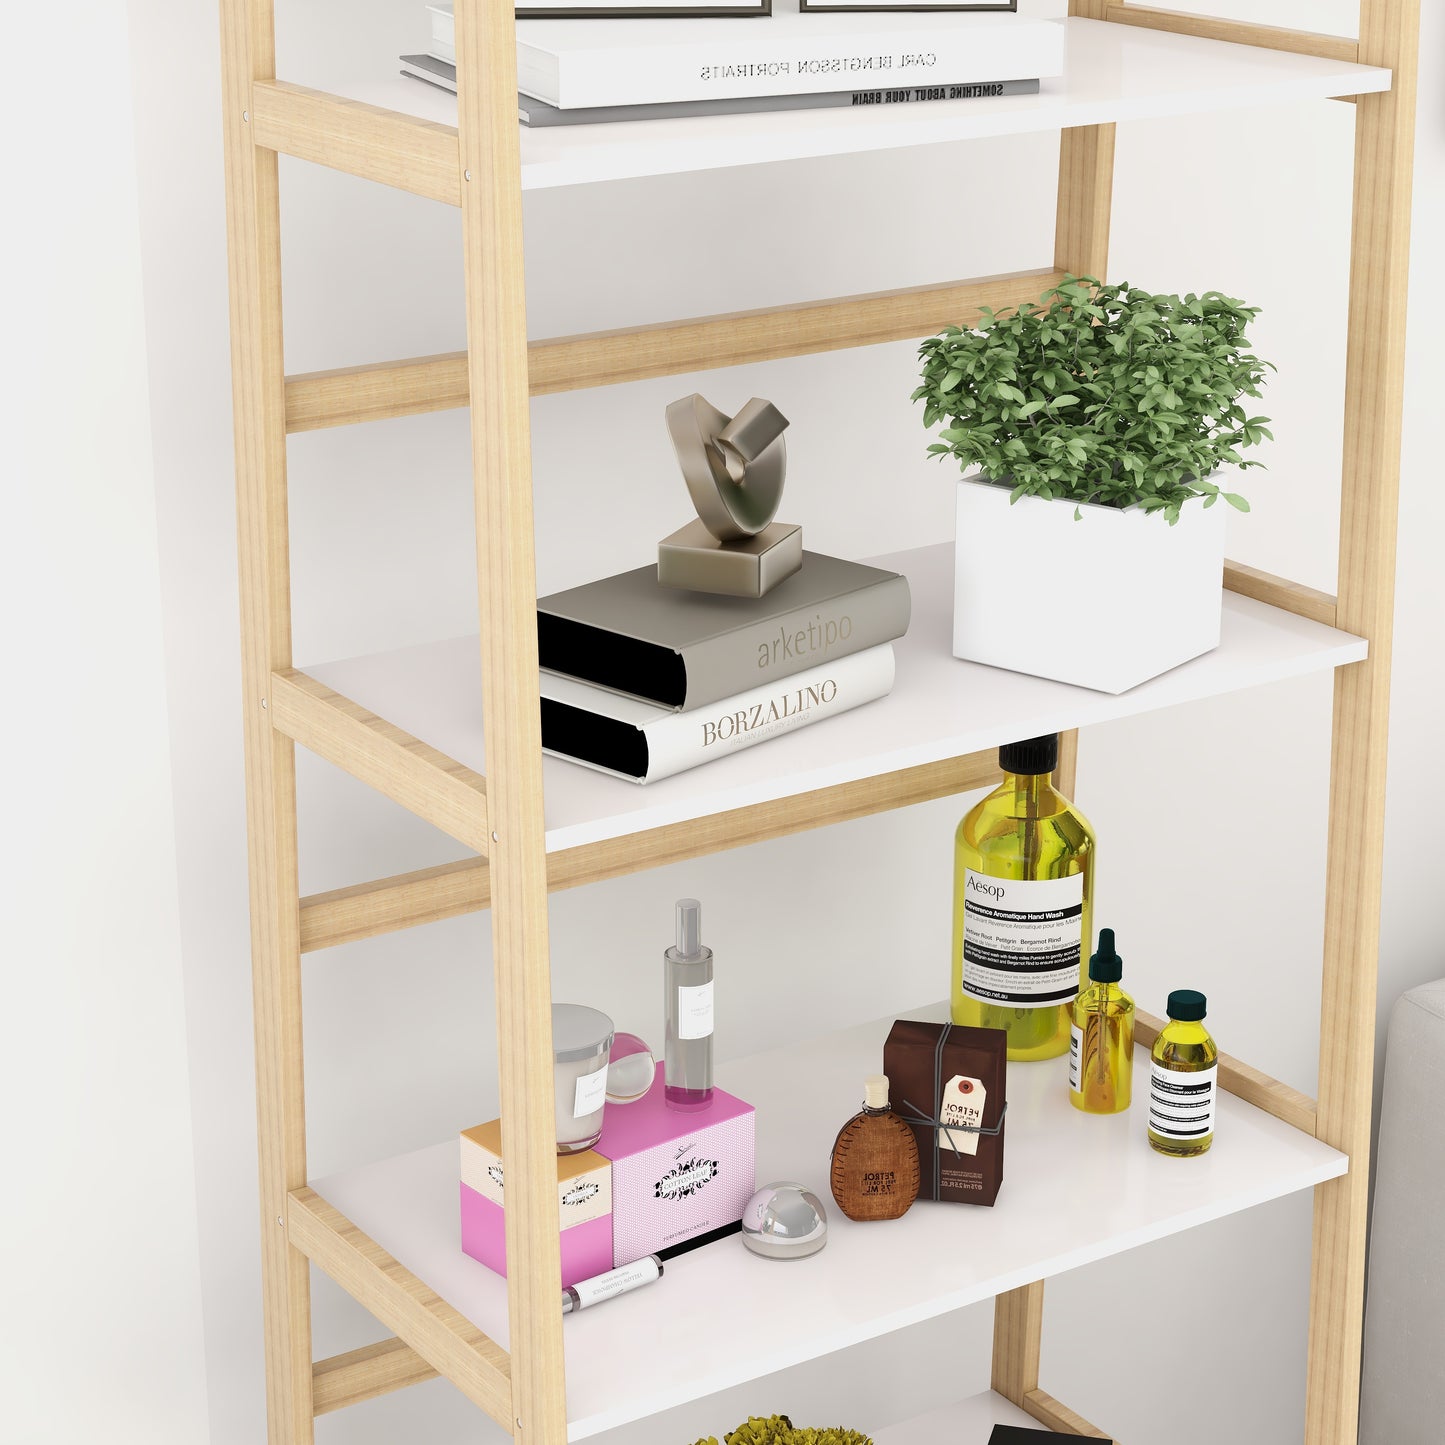 Solid bamboo wood oxford “A”frame ladder display bookshelf